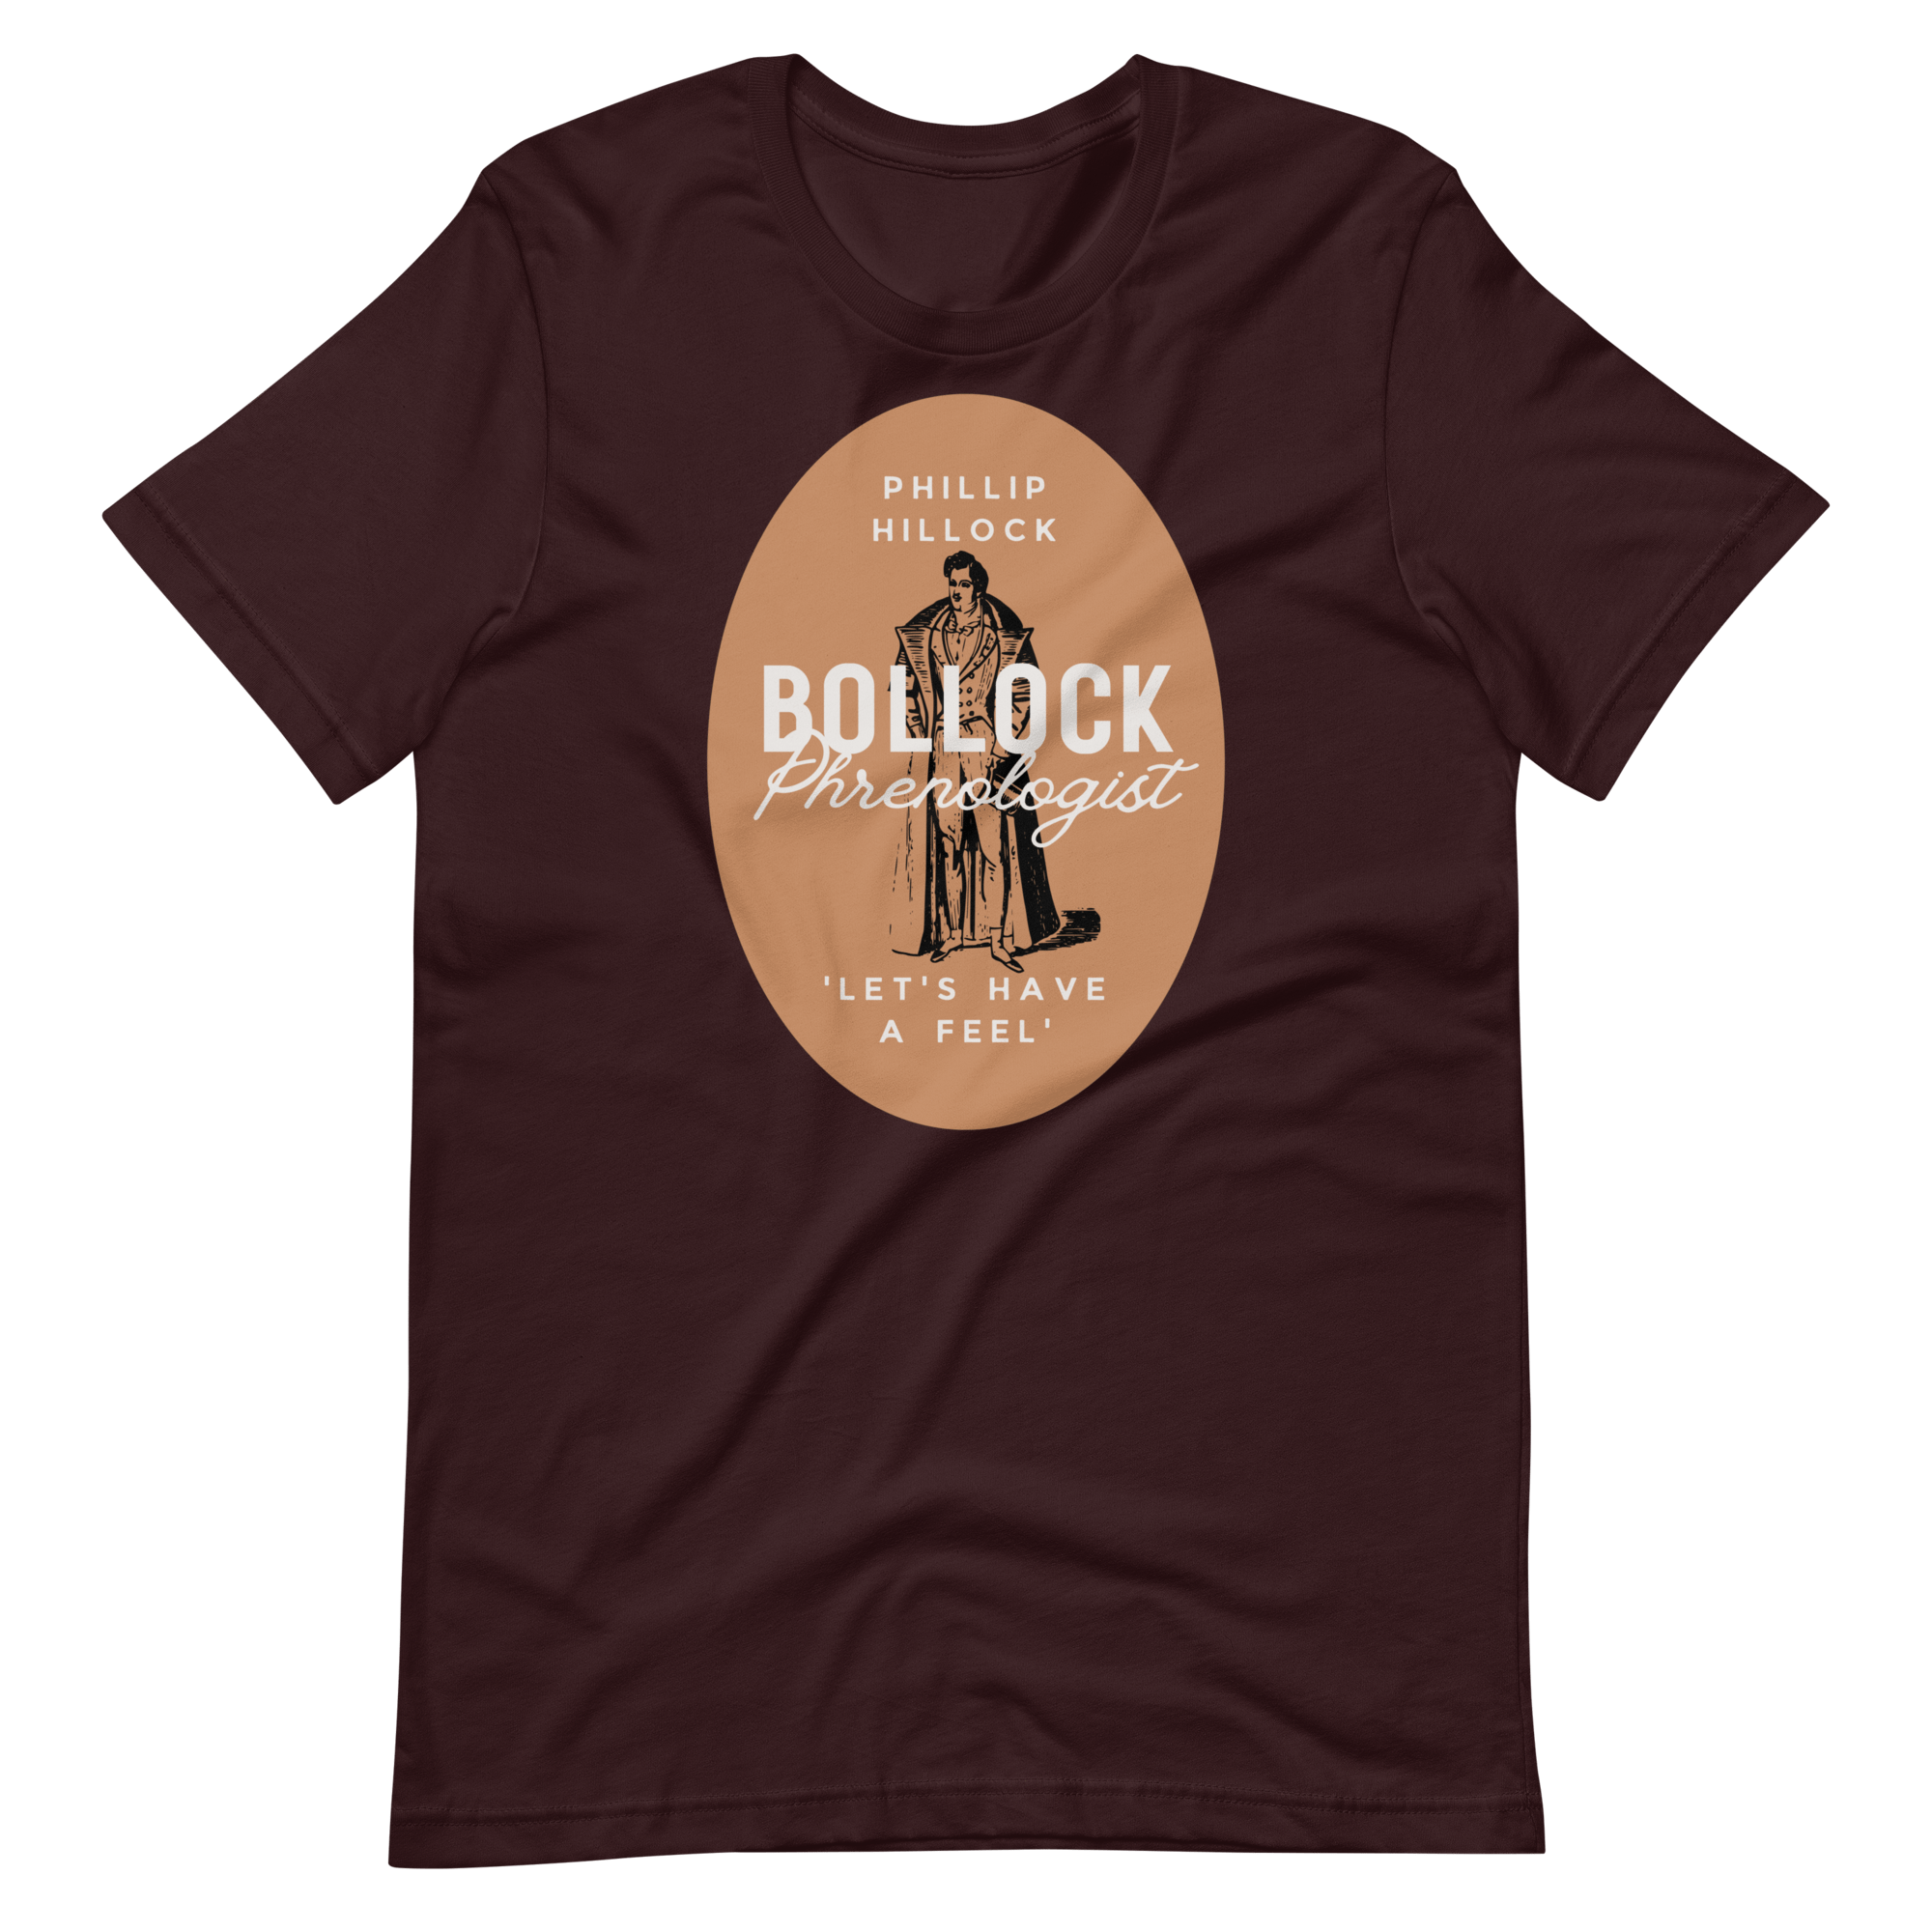 Phillip Hillock Bollock Phrenologist T-shirt Oxblood Black / S Jolly & Goode